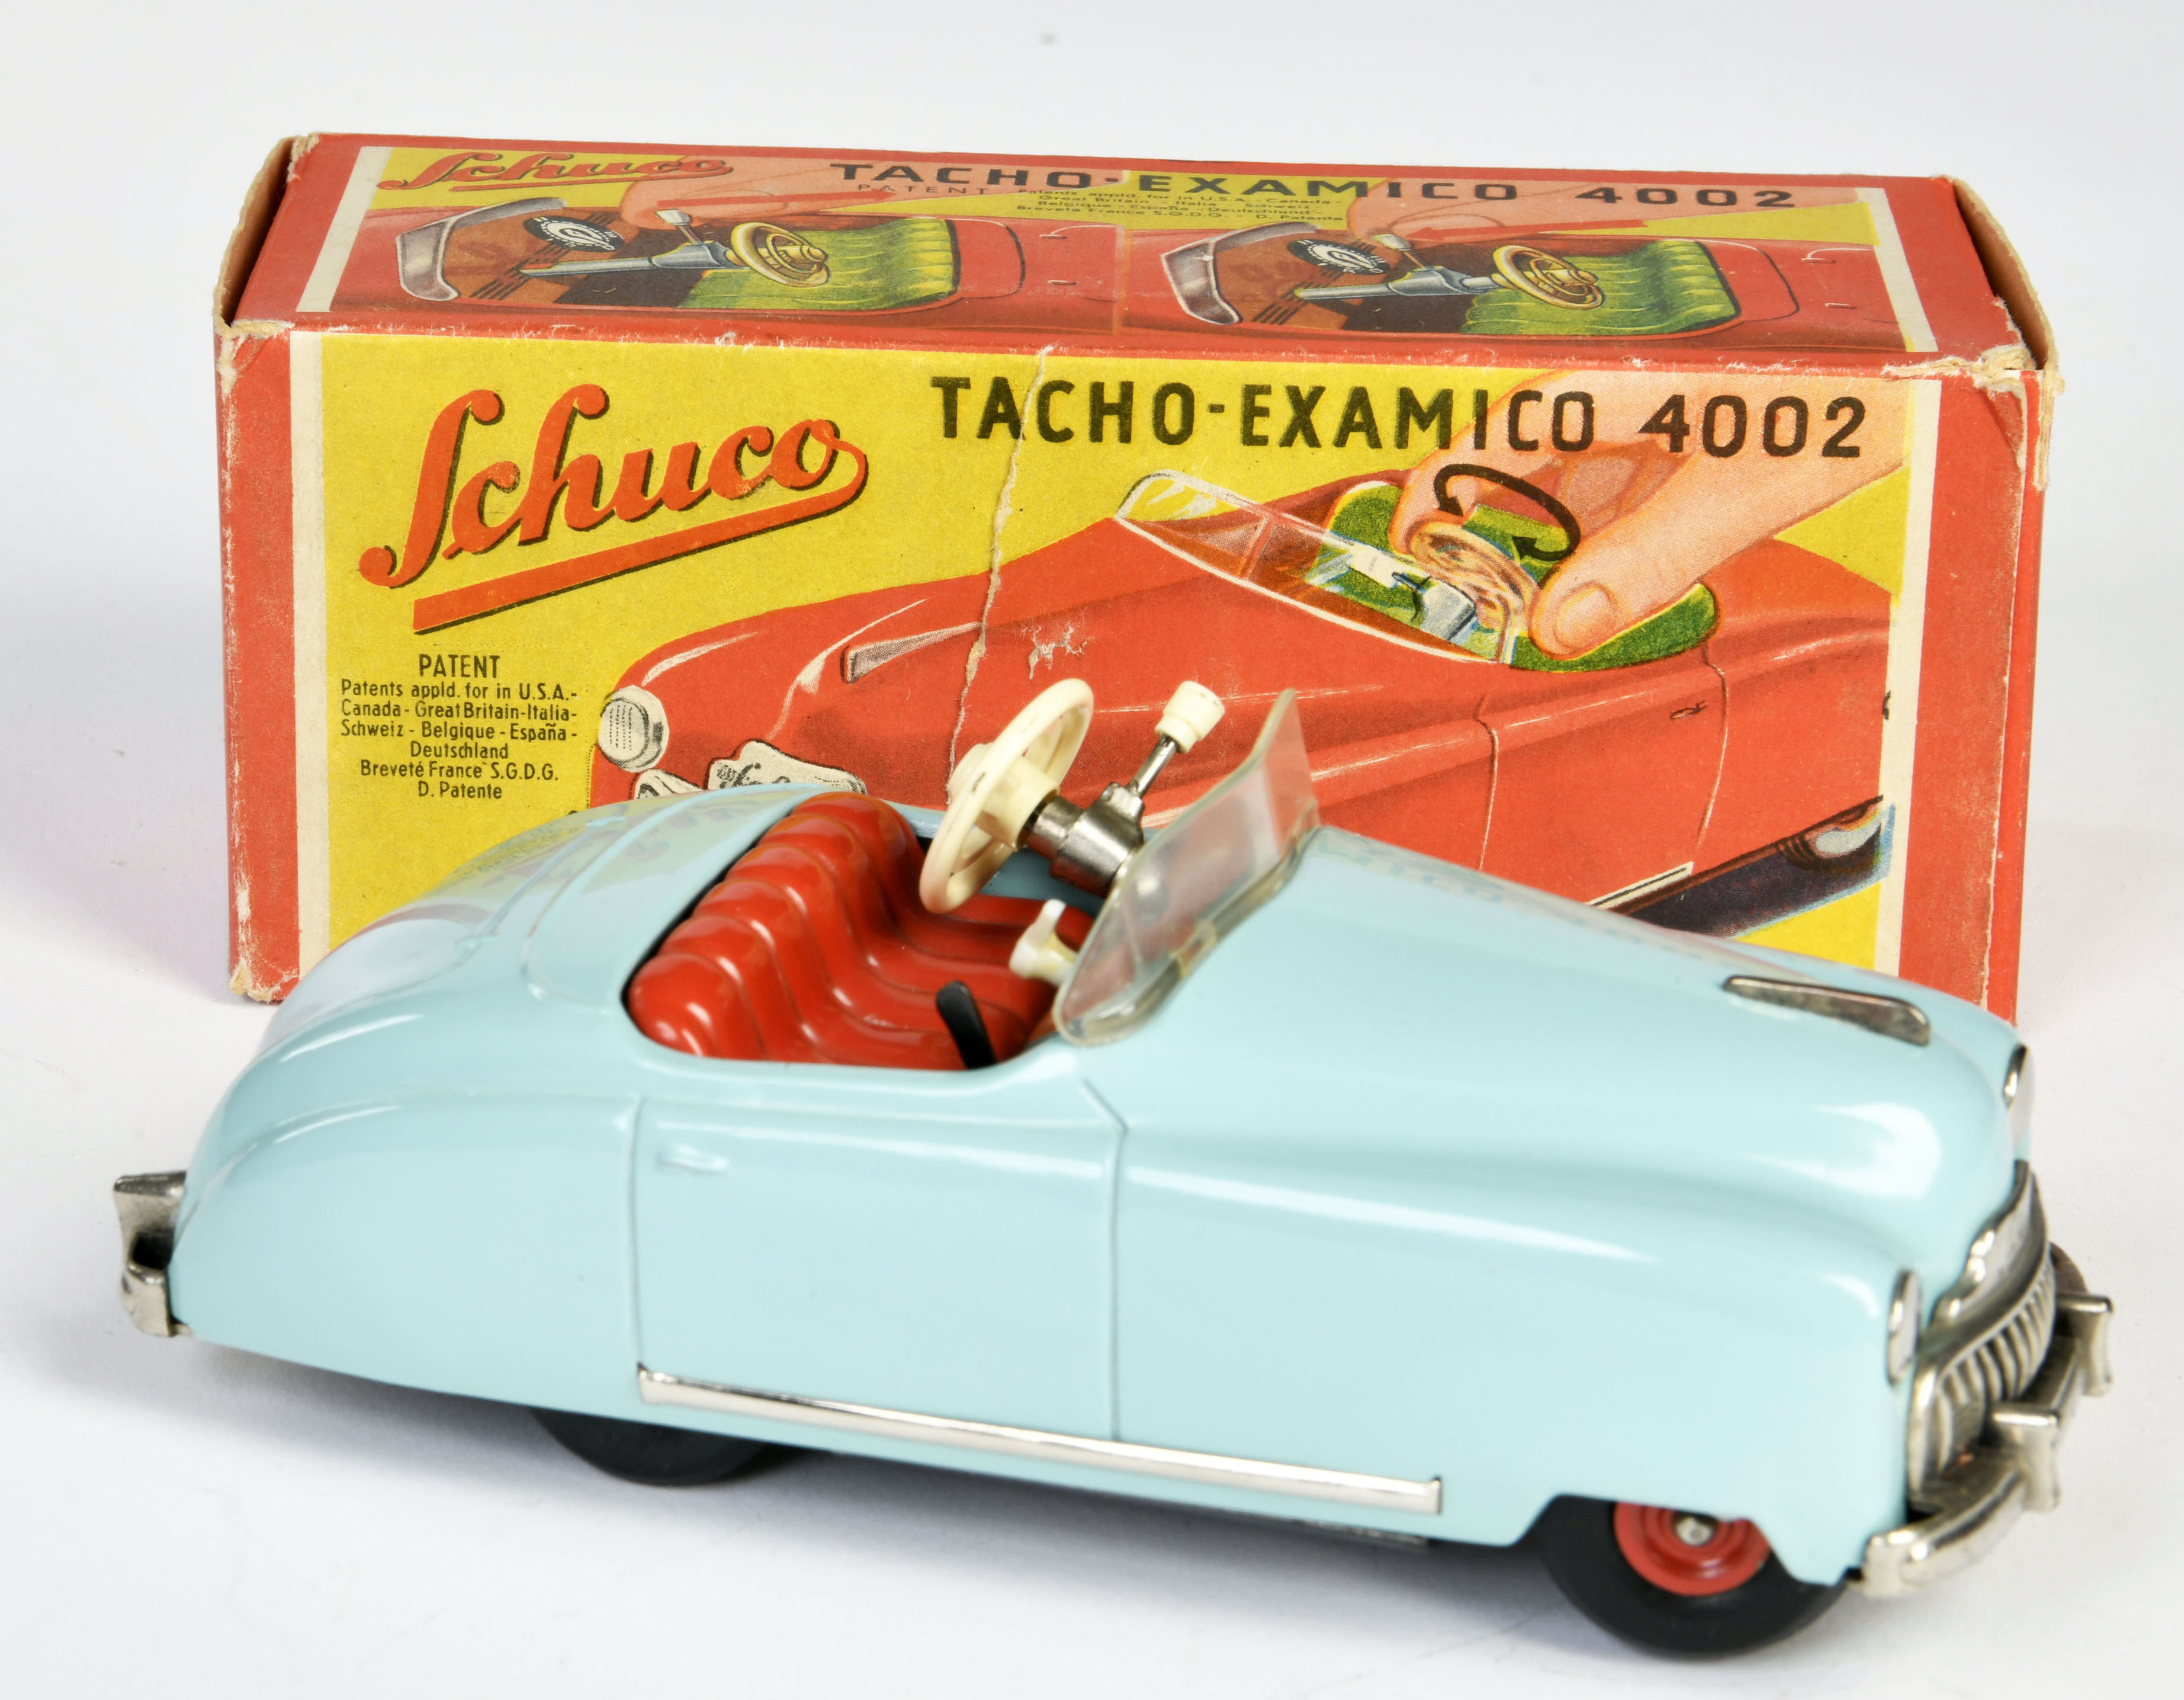 Schuco, Tacho Examico 4002, US Z. Germany, 16 cm, tin, cw ok, box C 1-, C 1 - Image 2 of 3